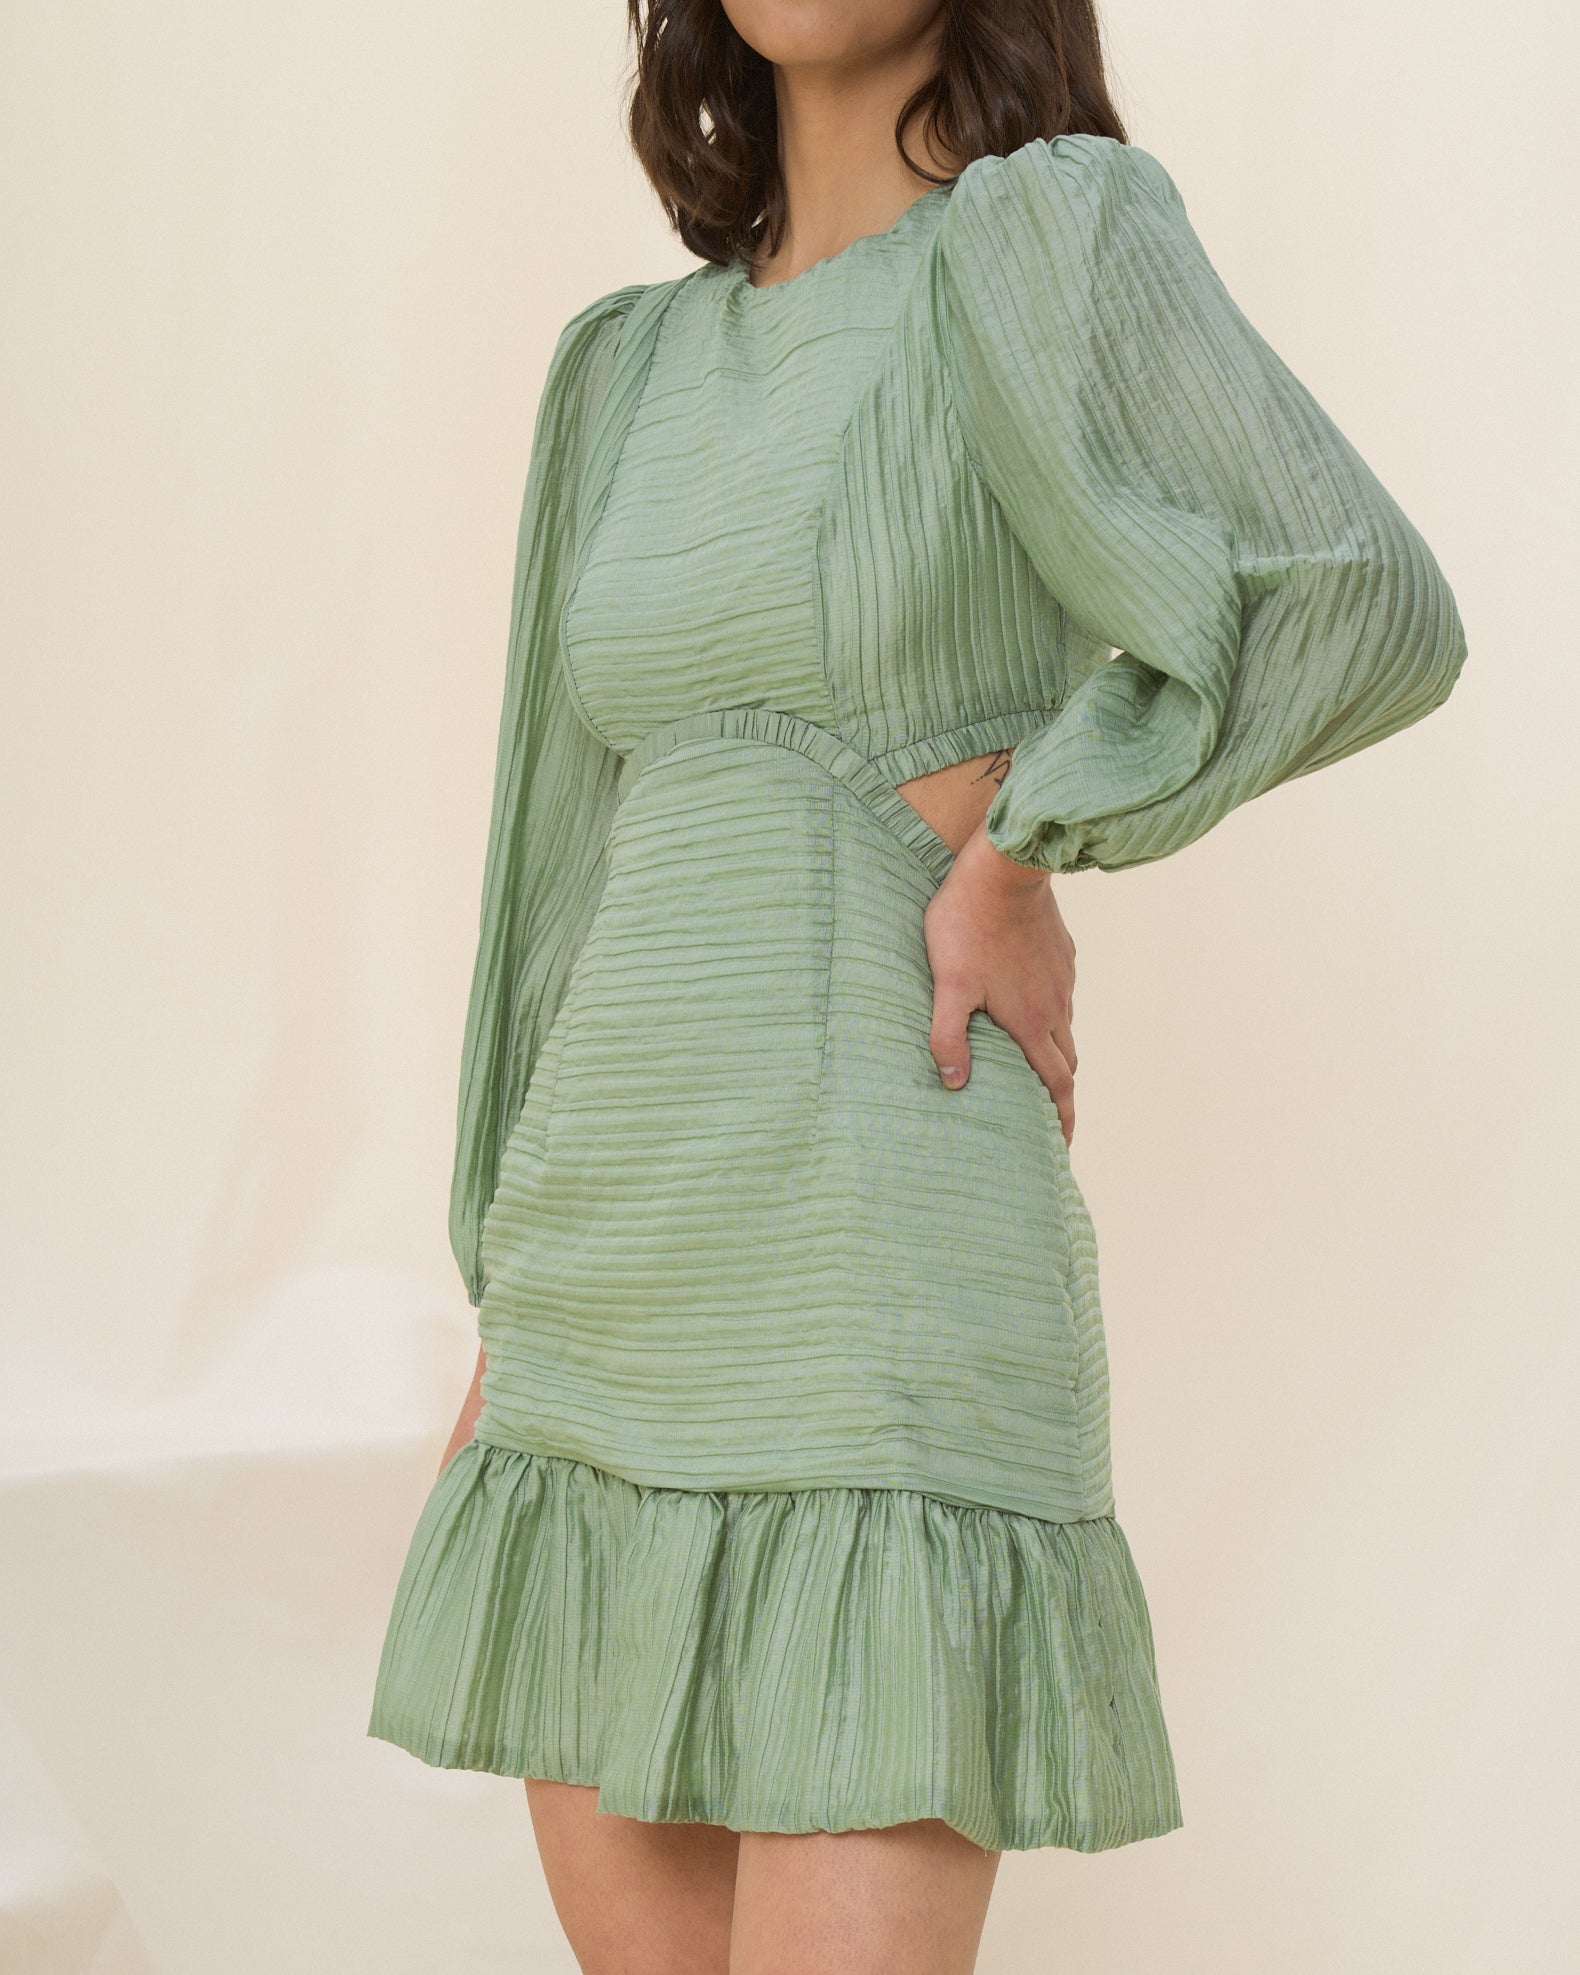 Esper Sage Green Long Sleeve Cut Out Mini Dress